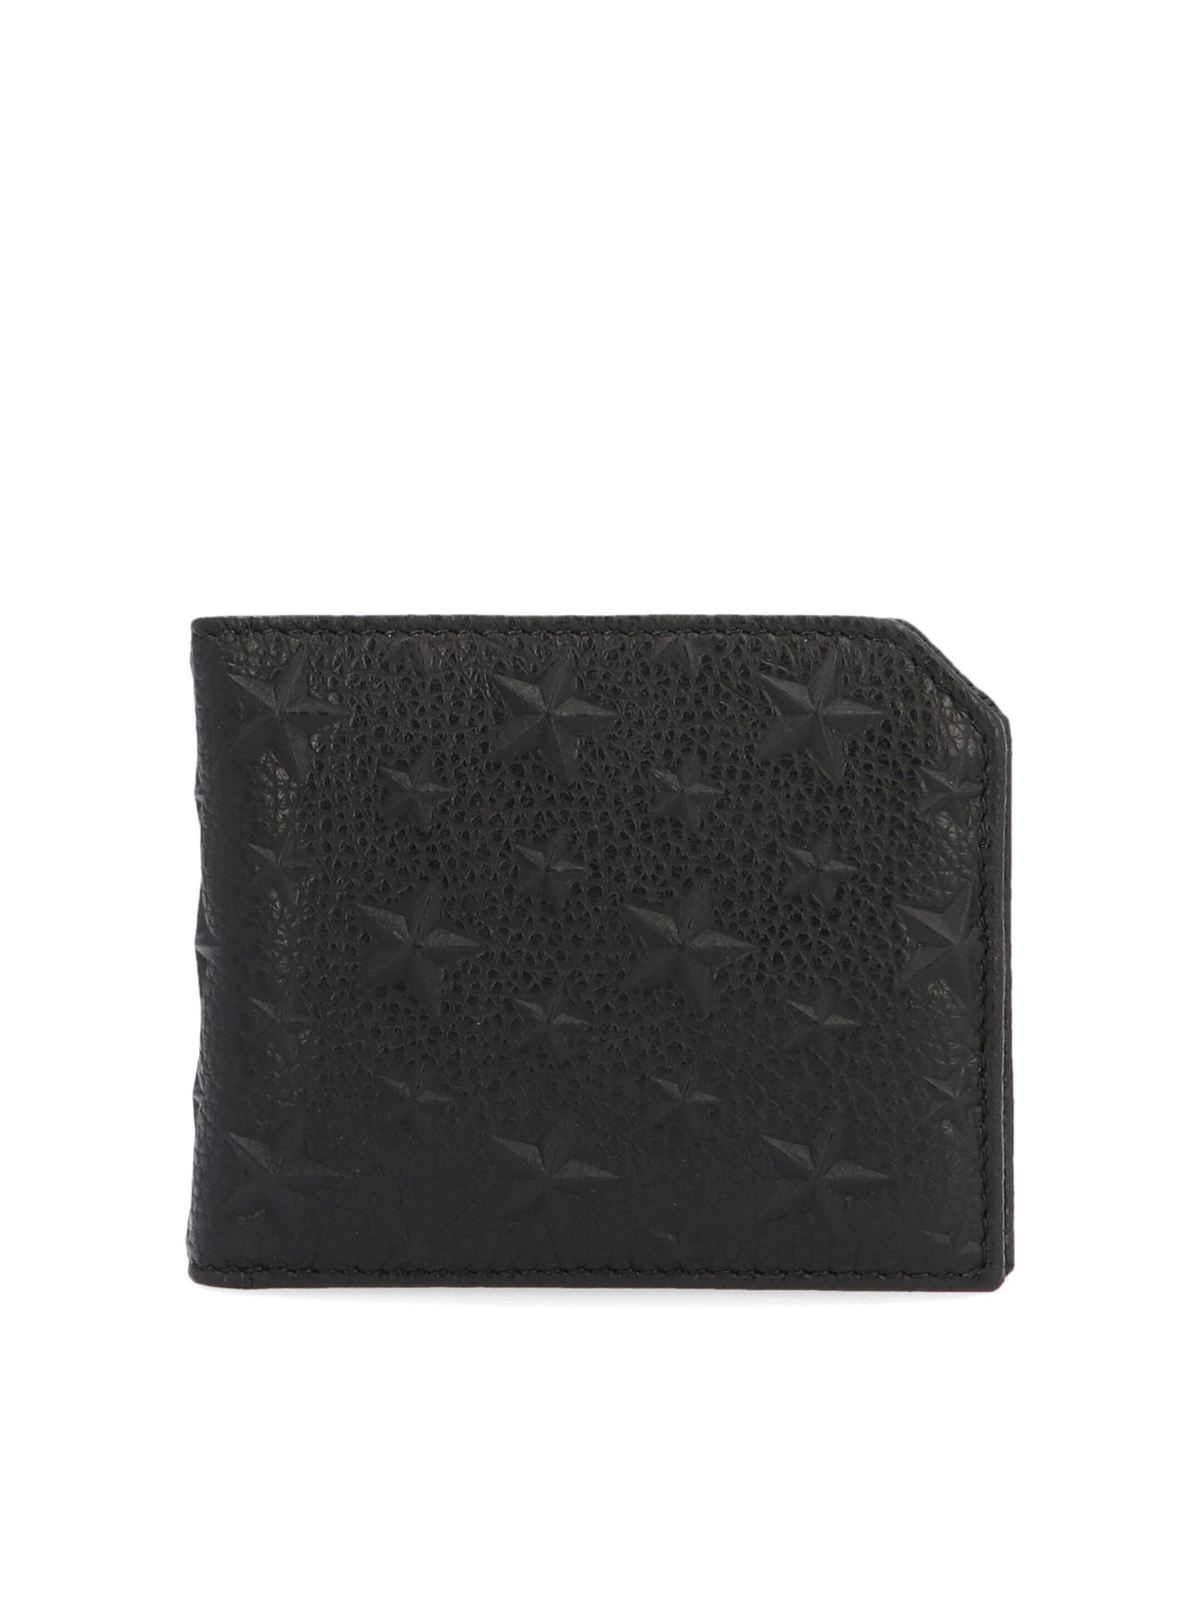 Wallets & purses Jimmy Choo - Albany Emg wallet in black - ALBANYEMGBLACK